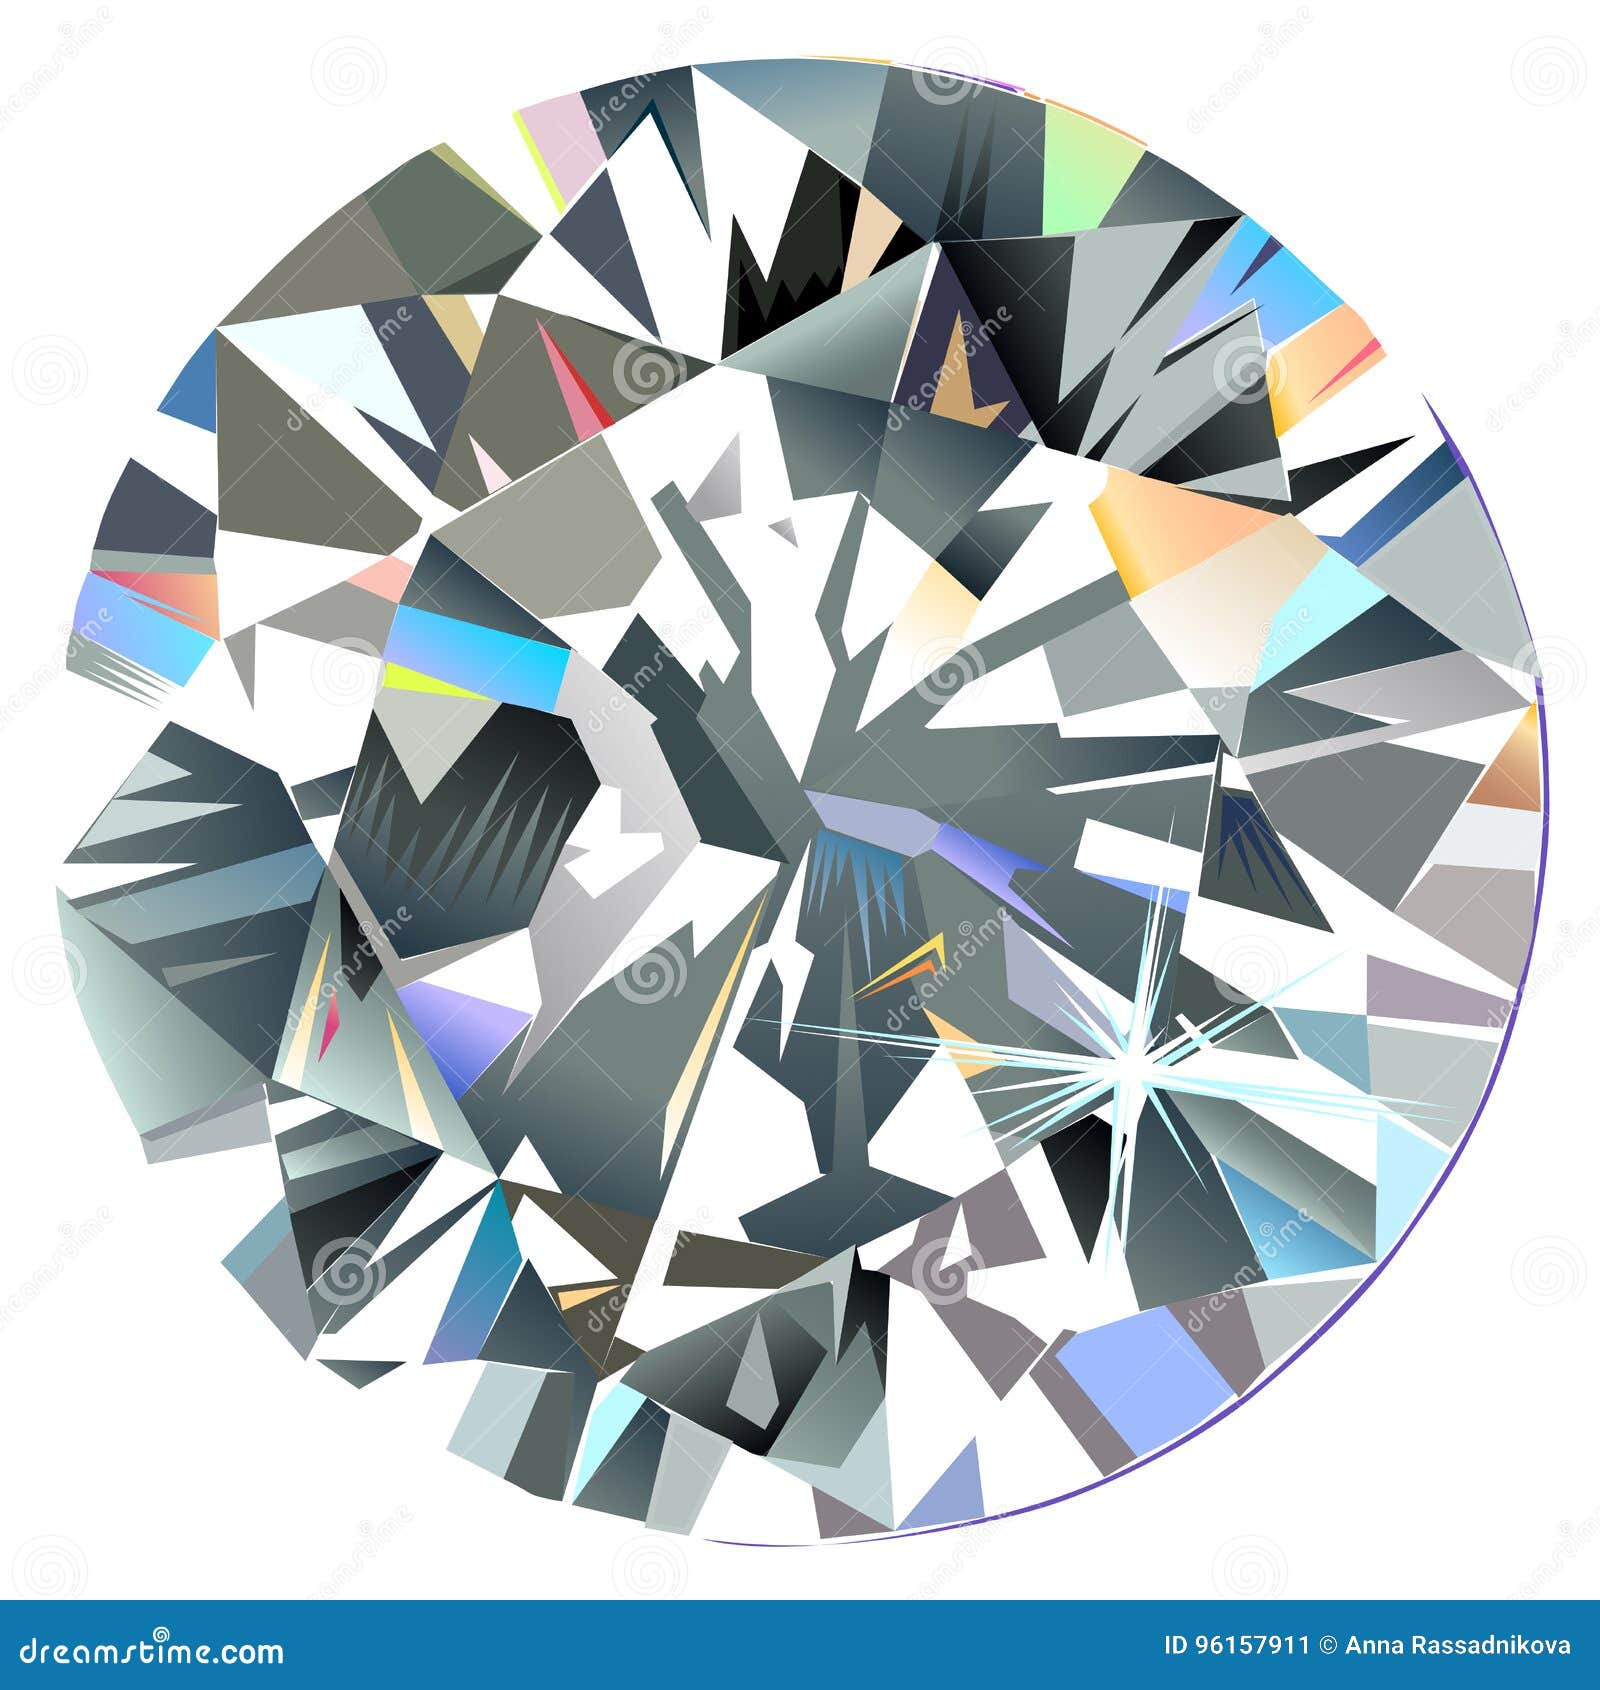 Mursten sponsor køkken Diamond top view stock vector. Illustration of crystal - 96157911